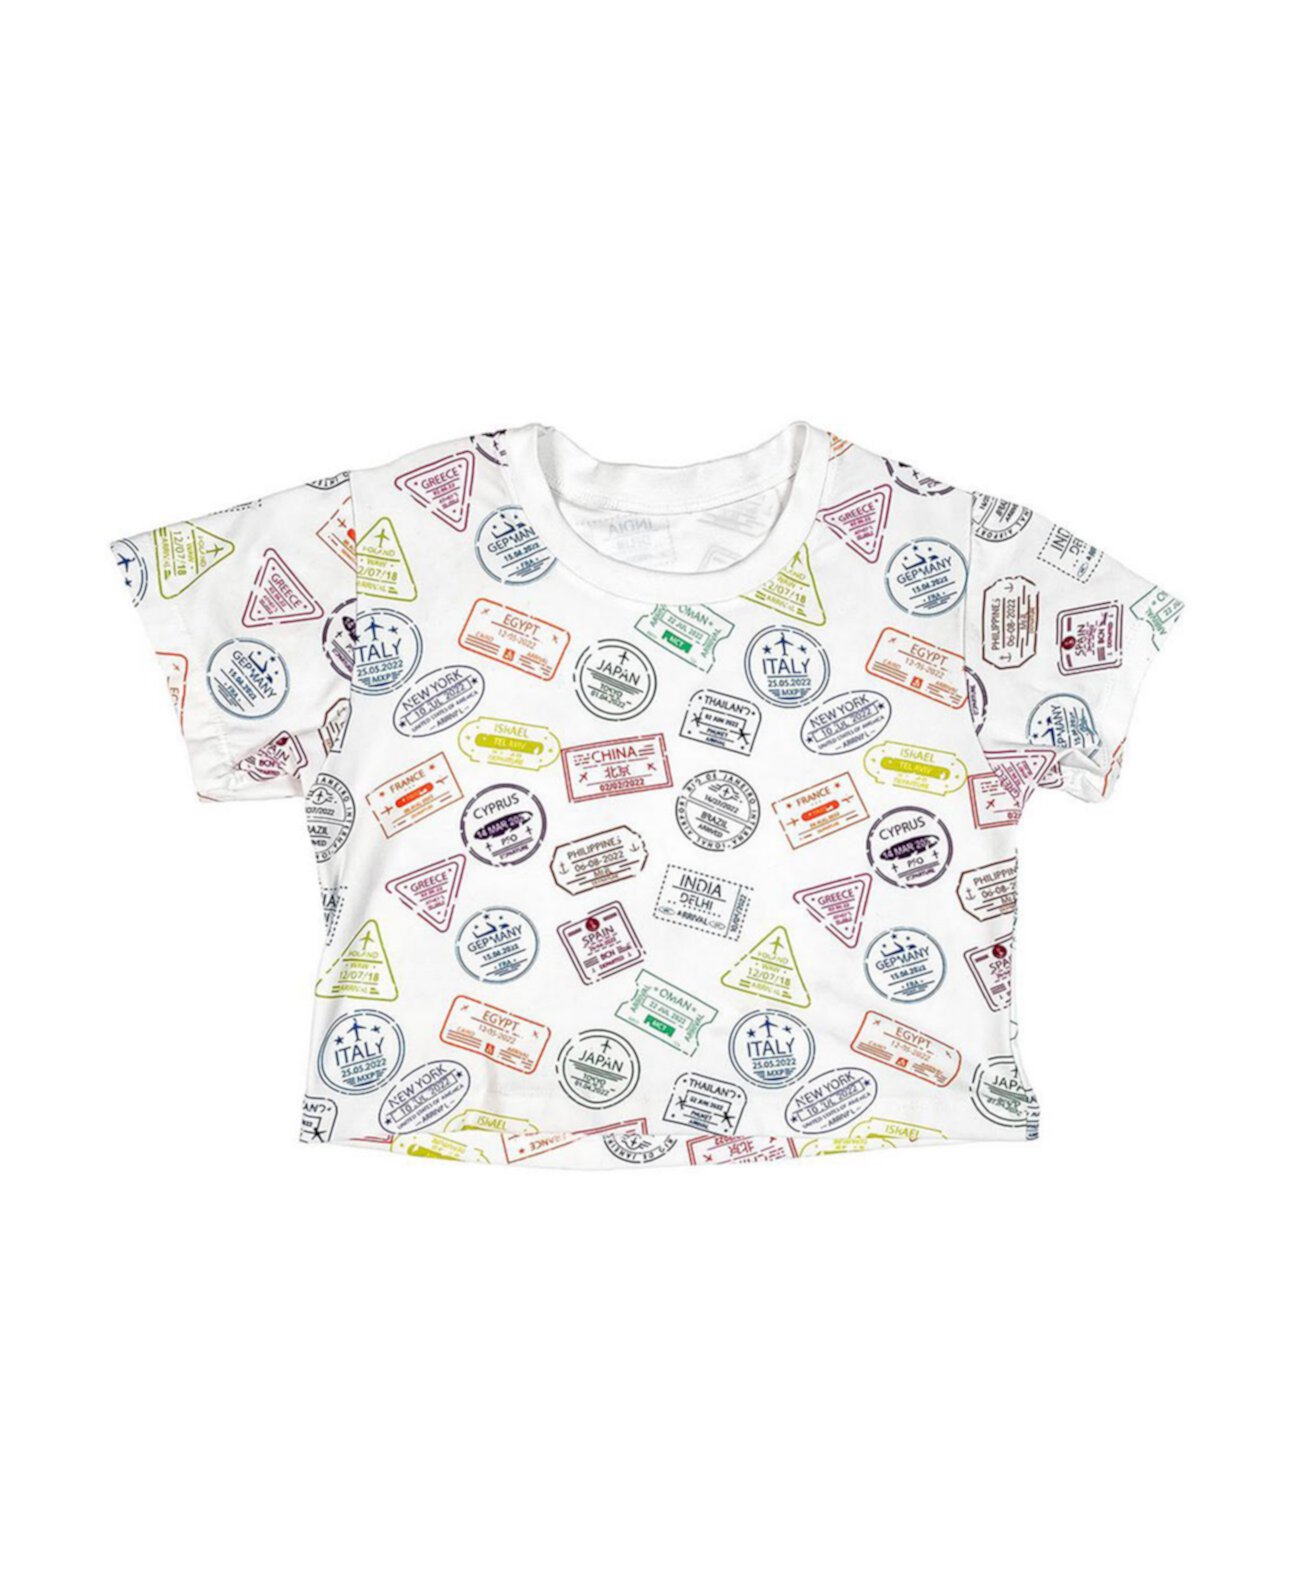 Укороченная футболка Little Girls Viaje с рисунком Mixed Up Clothing